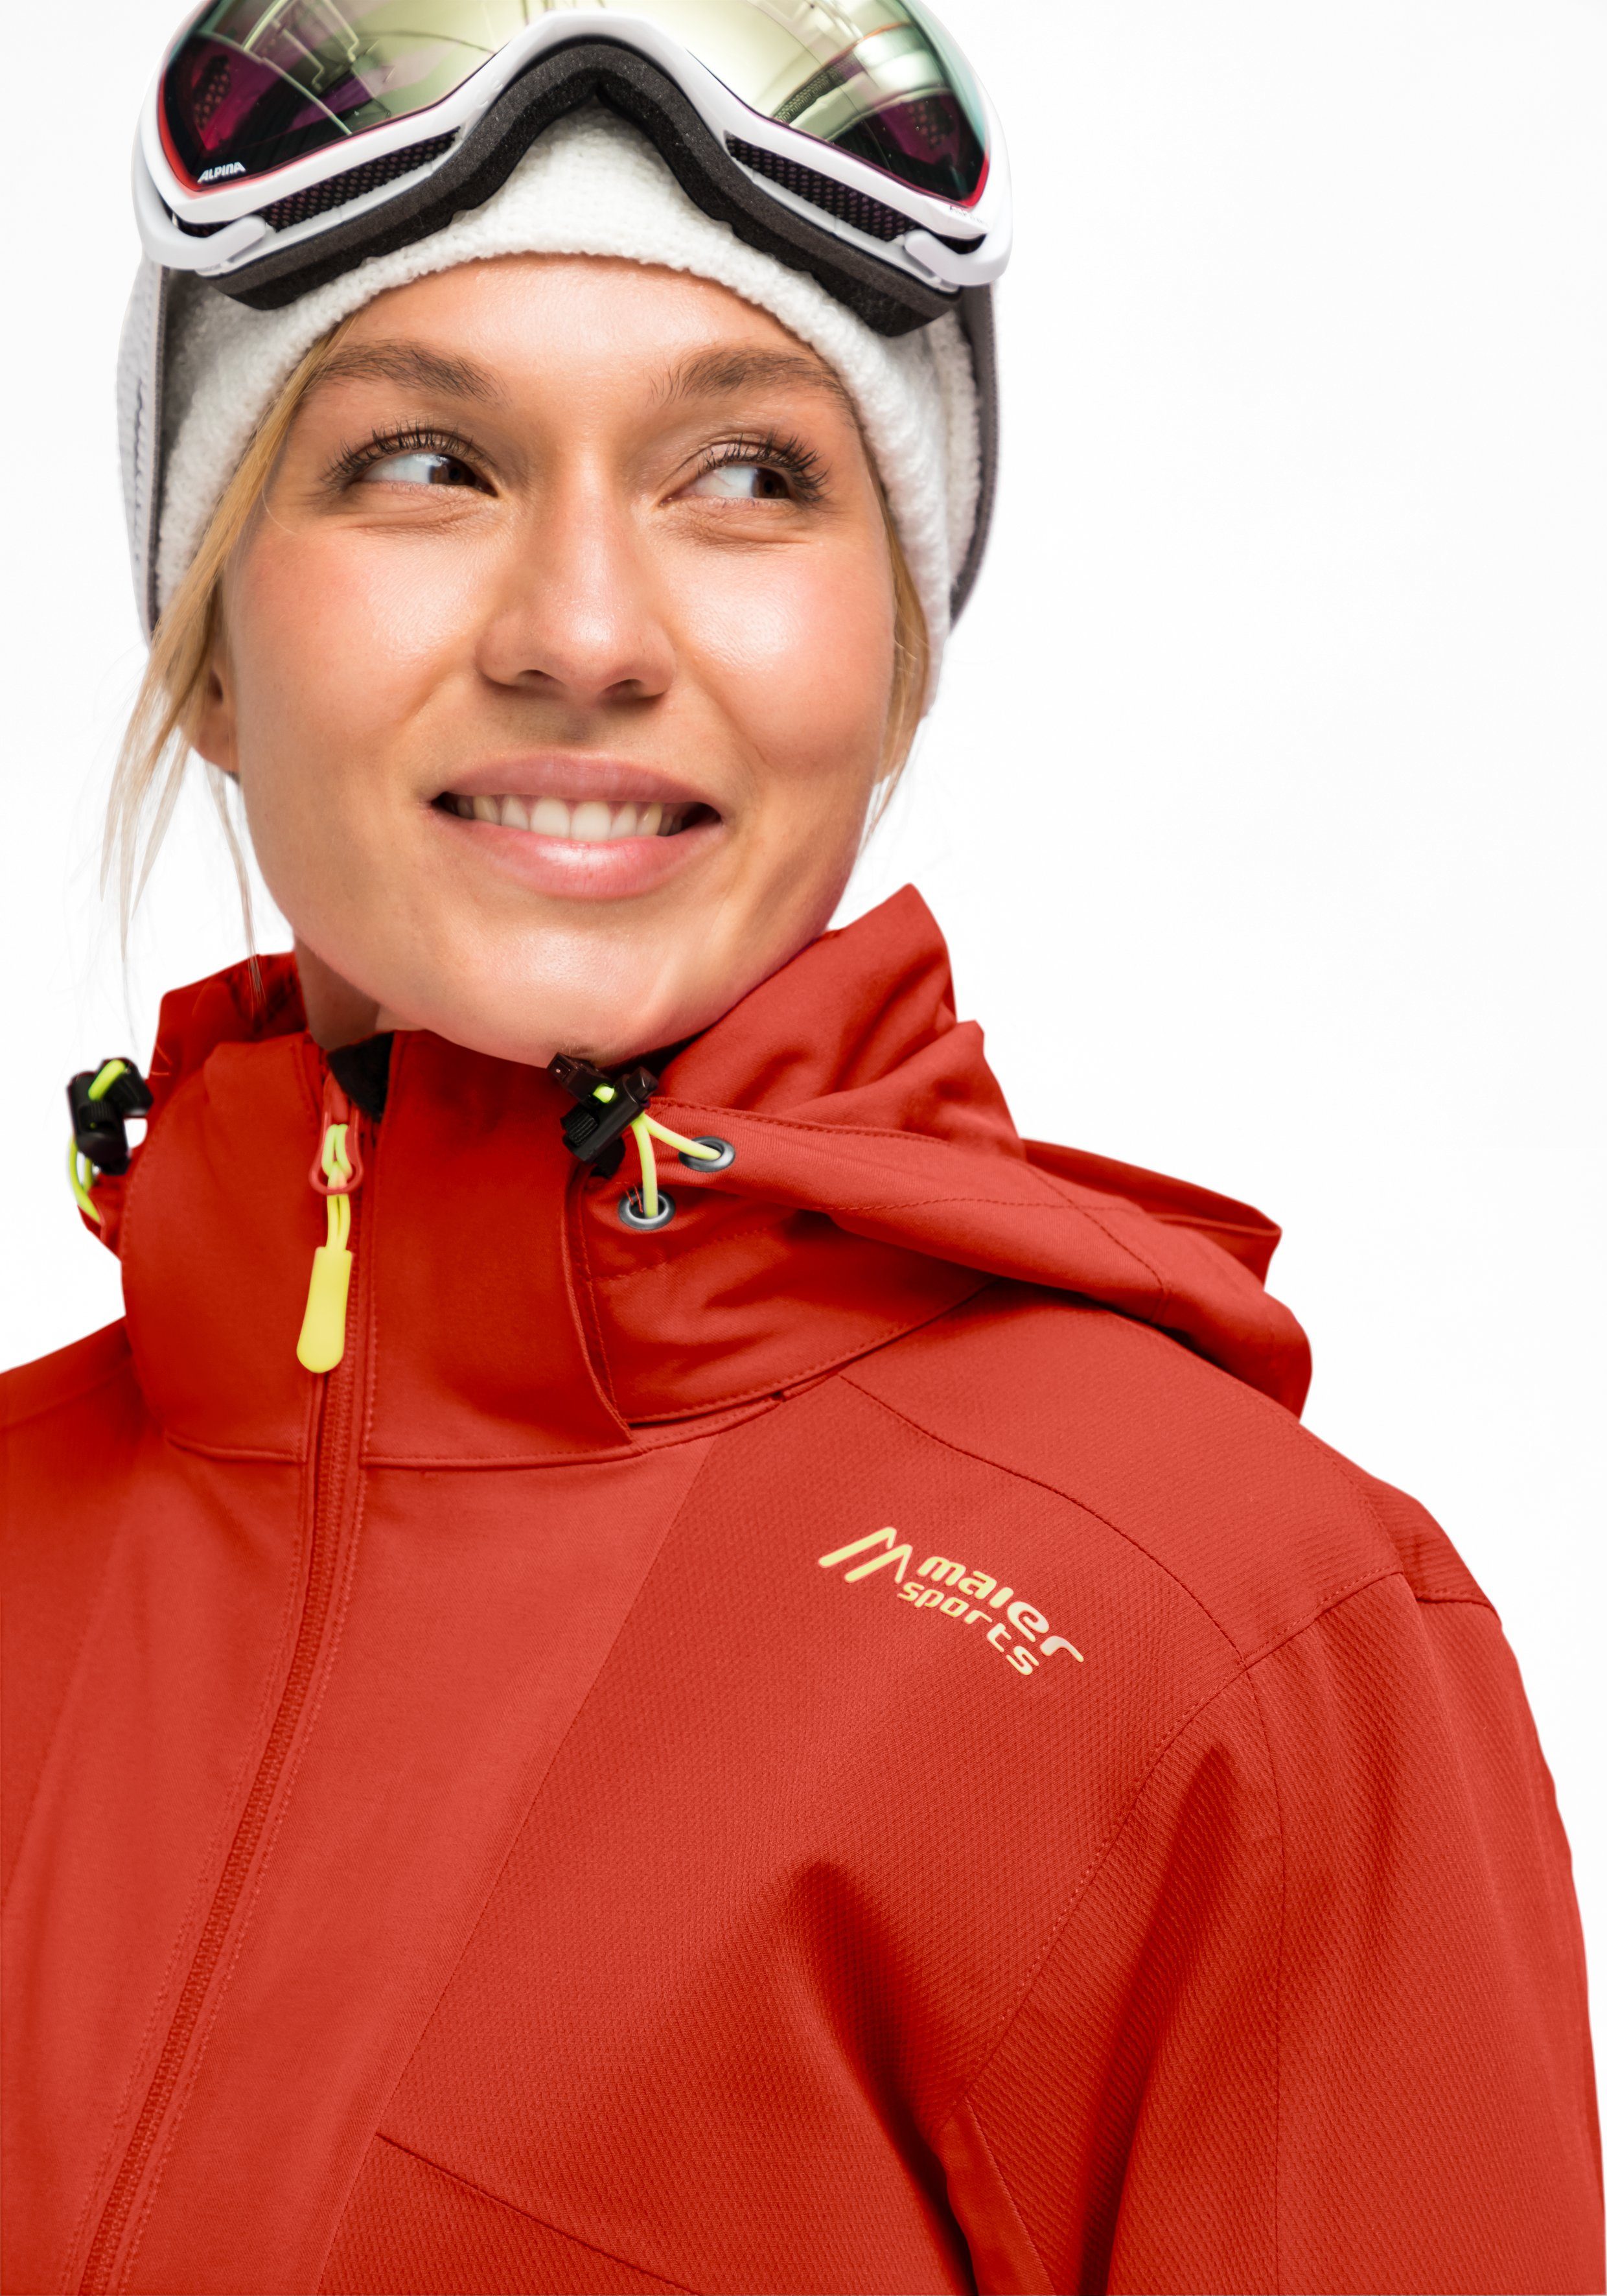 Maier Sports Skijacke orangerot Skijacke W und Impulse für Freeride Modern designte – Fast perfekt Piste